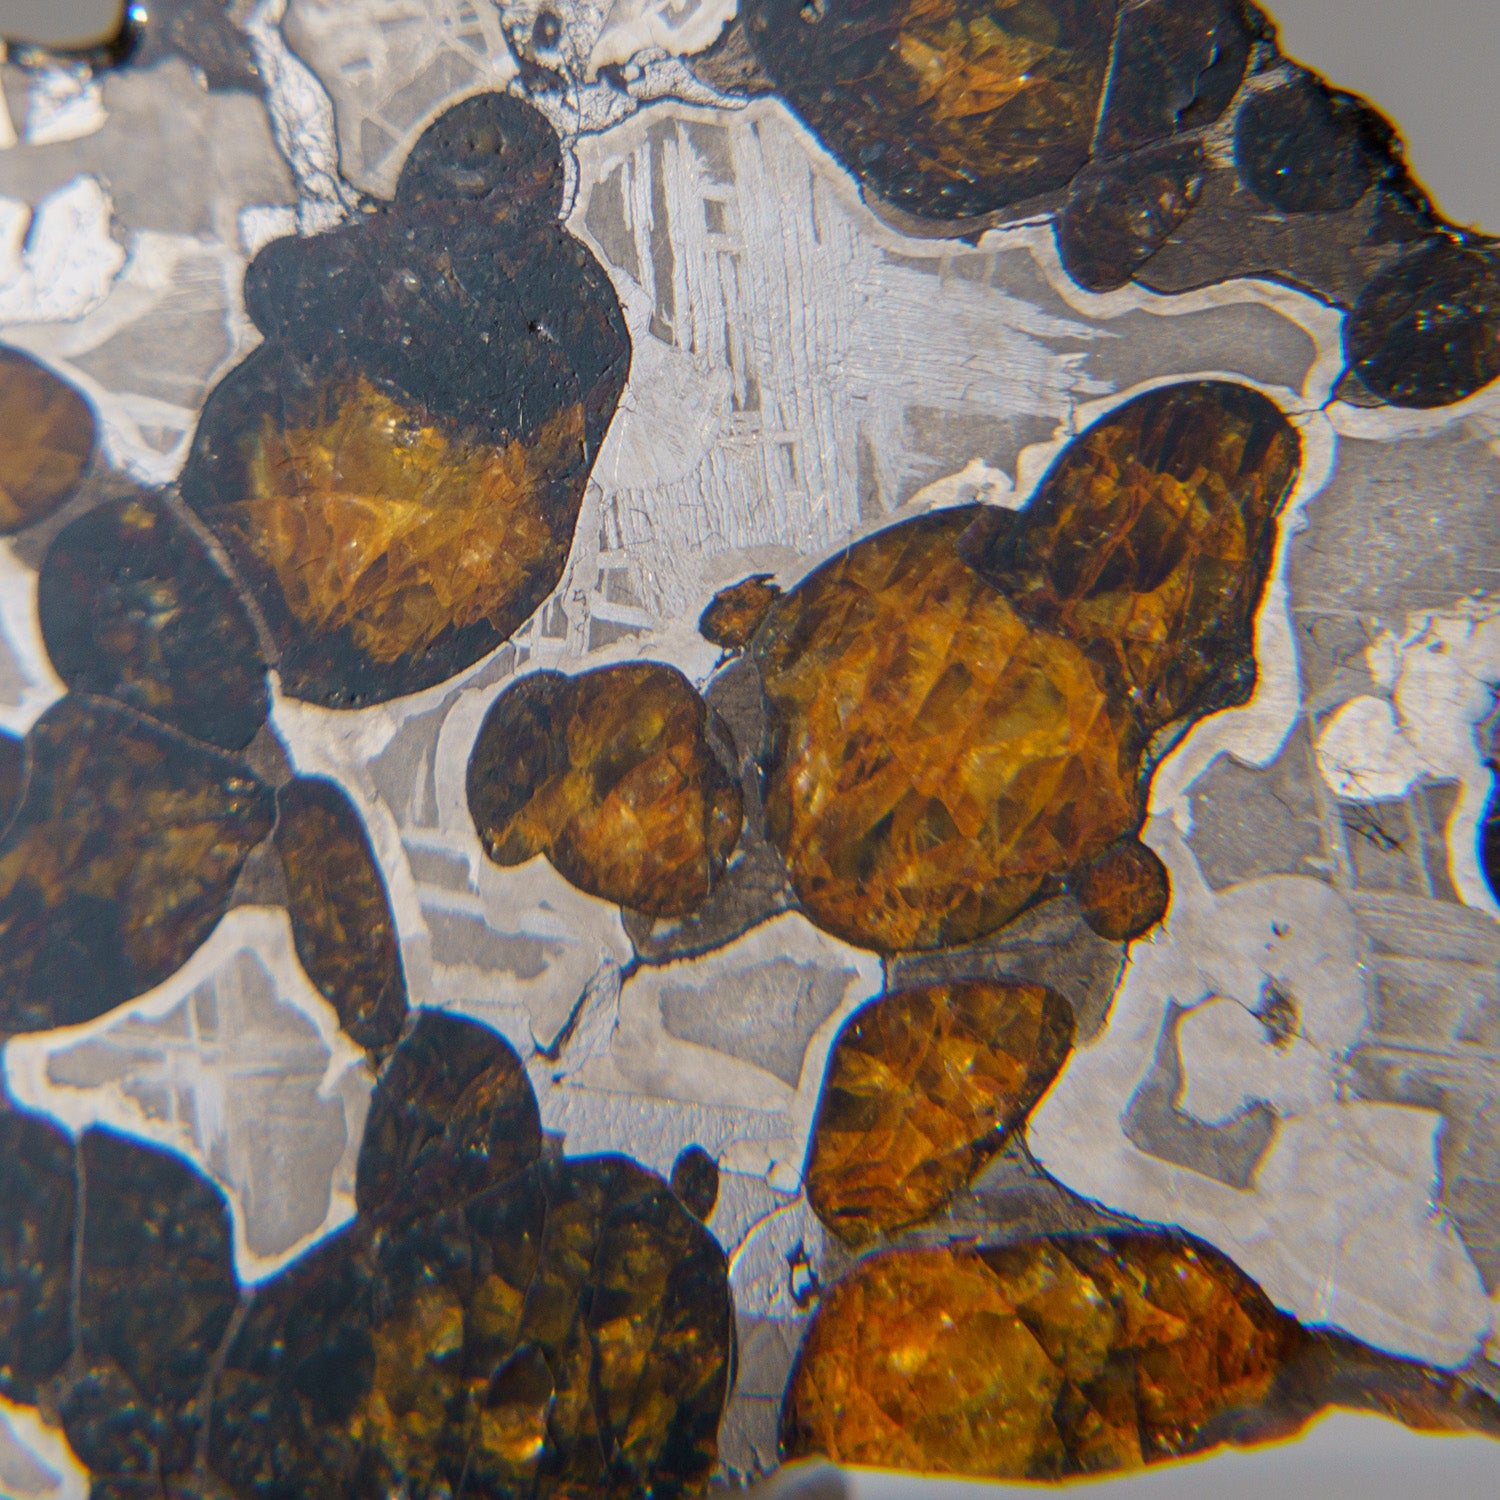 Genuine Brenhama Pallasite Meteorite Slice (25.5 grams)